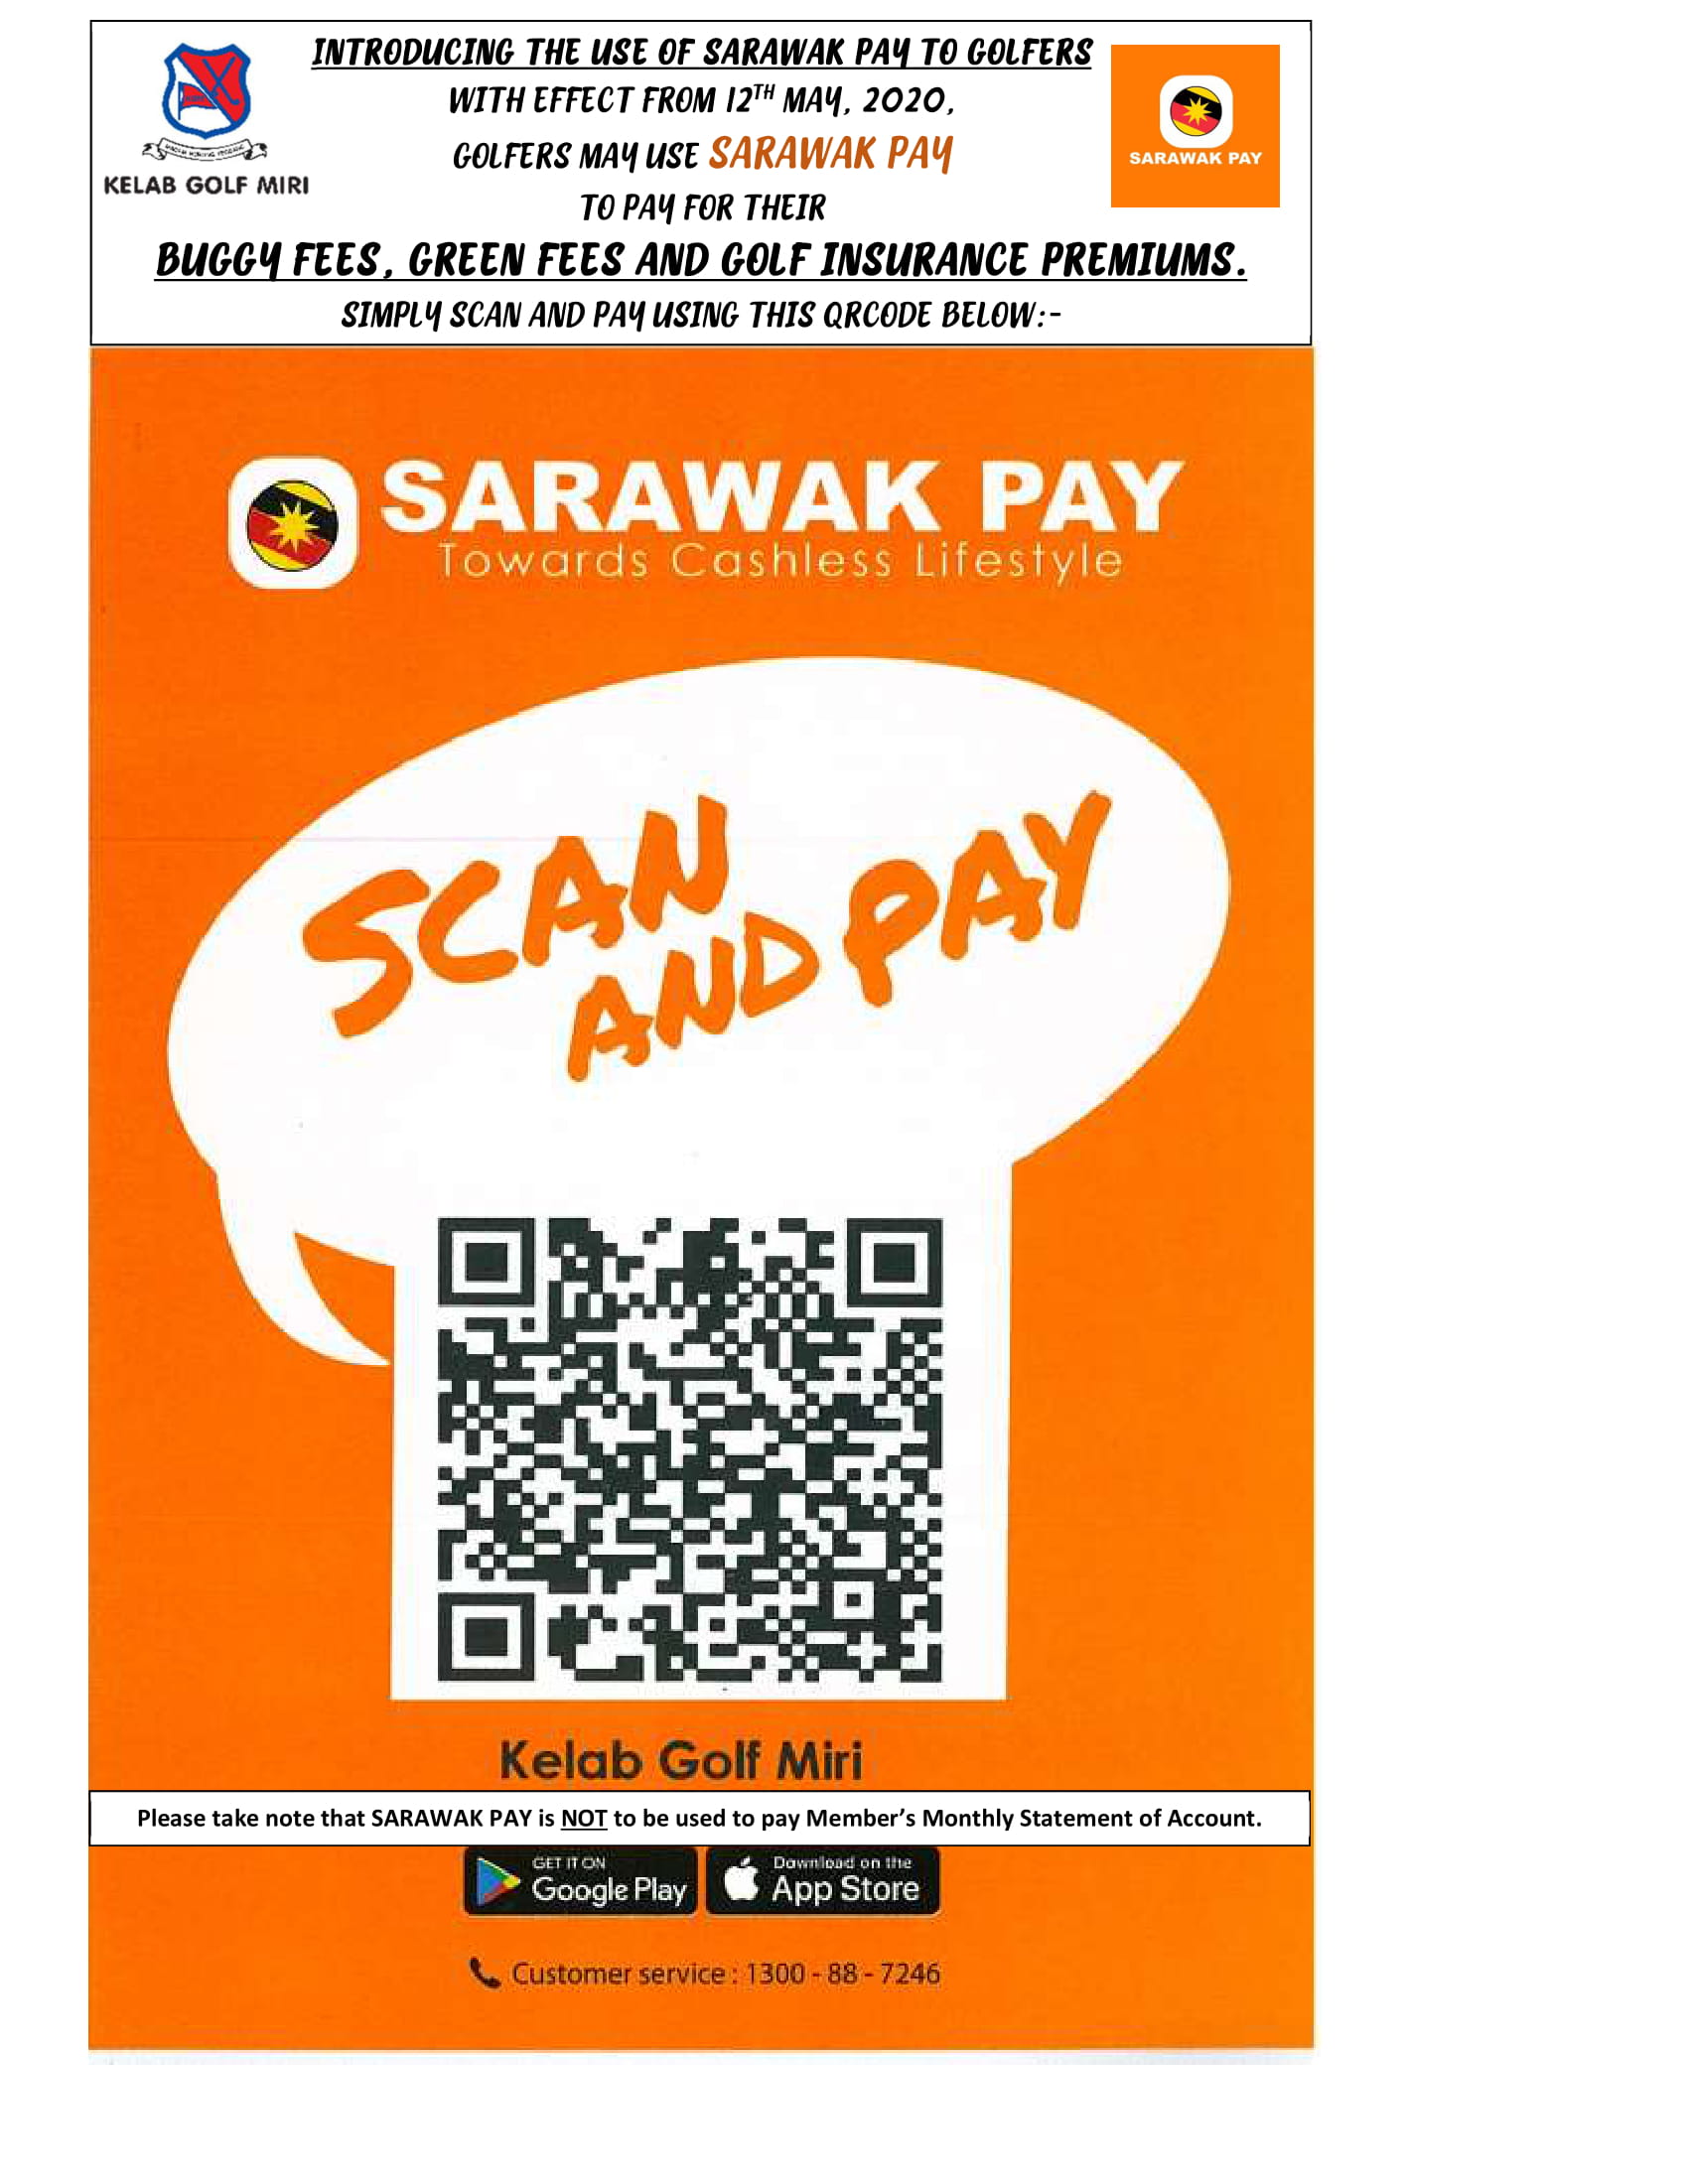 Sarawak pay